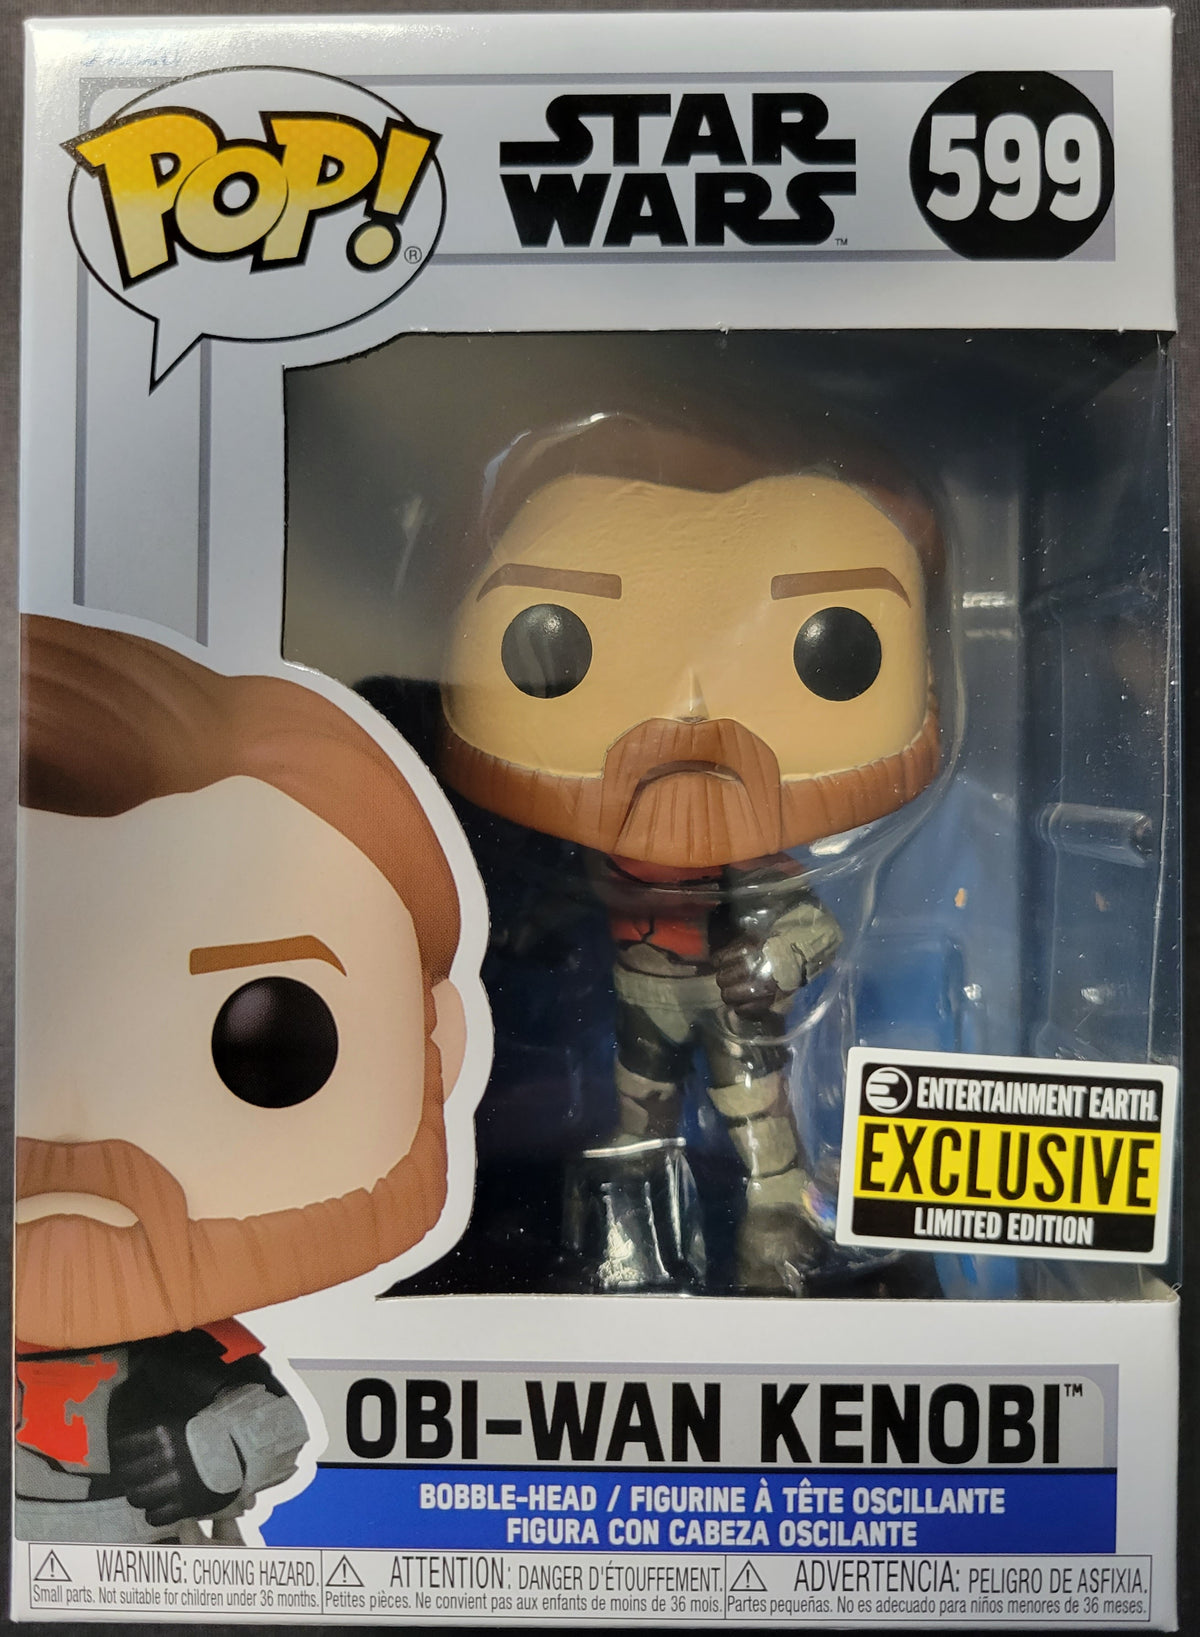 Obi-Wan Kenobi (Mandalorian Armor) #599 Entertainment Earth Exclusive